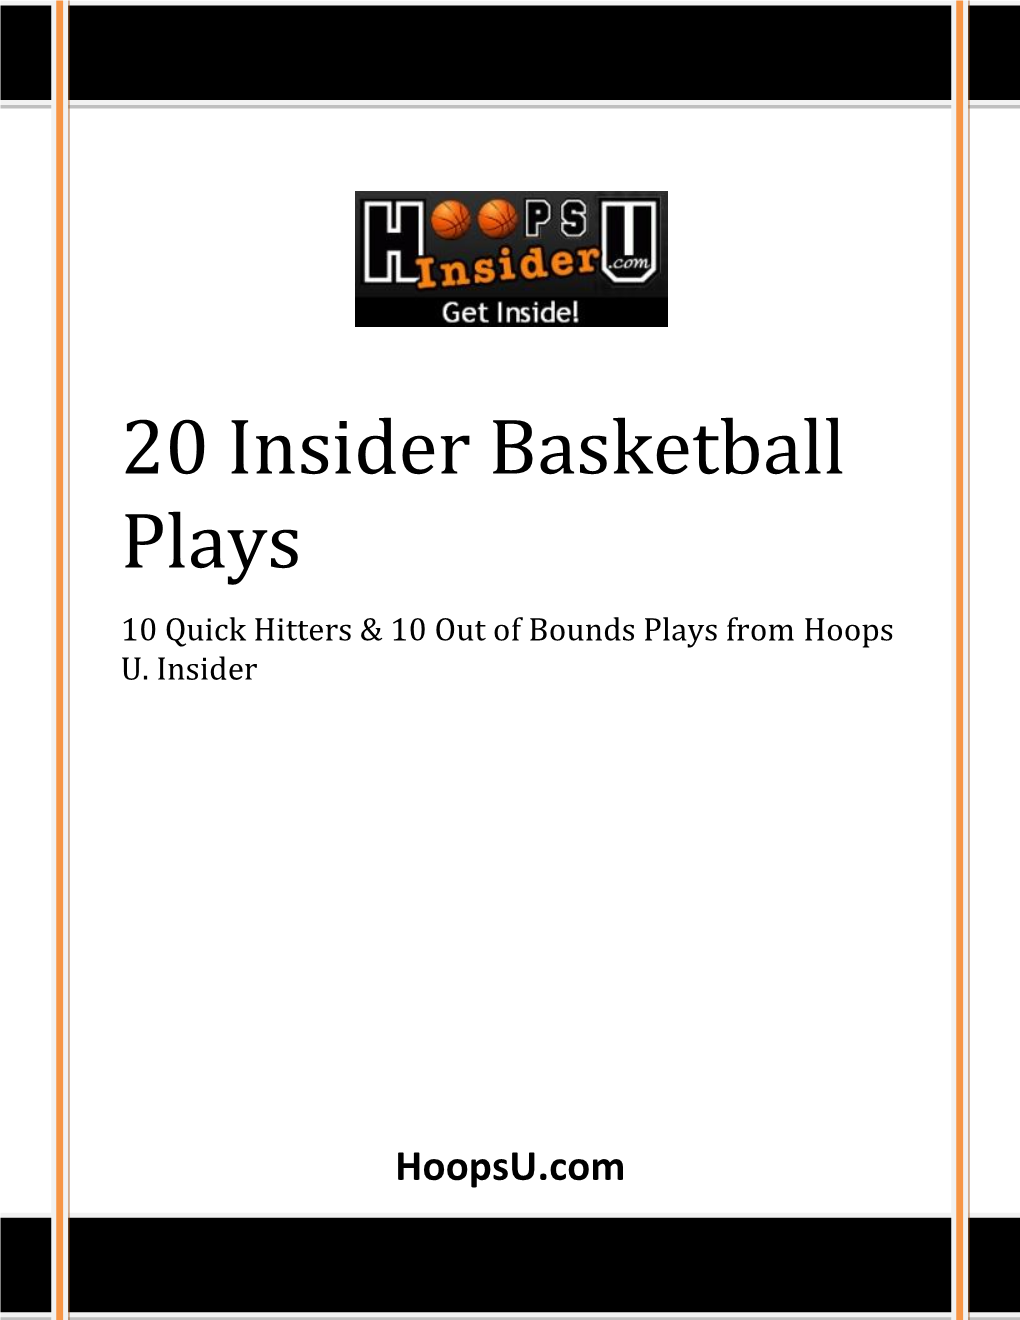 20 Insider Basketball Plays